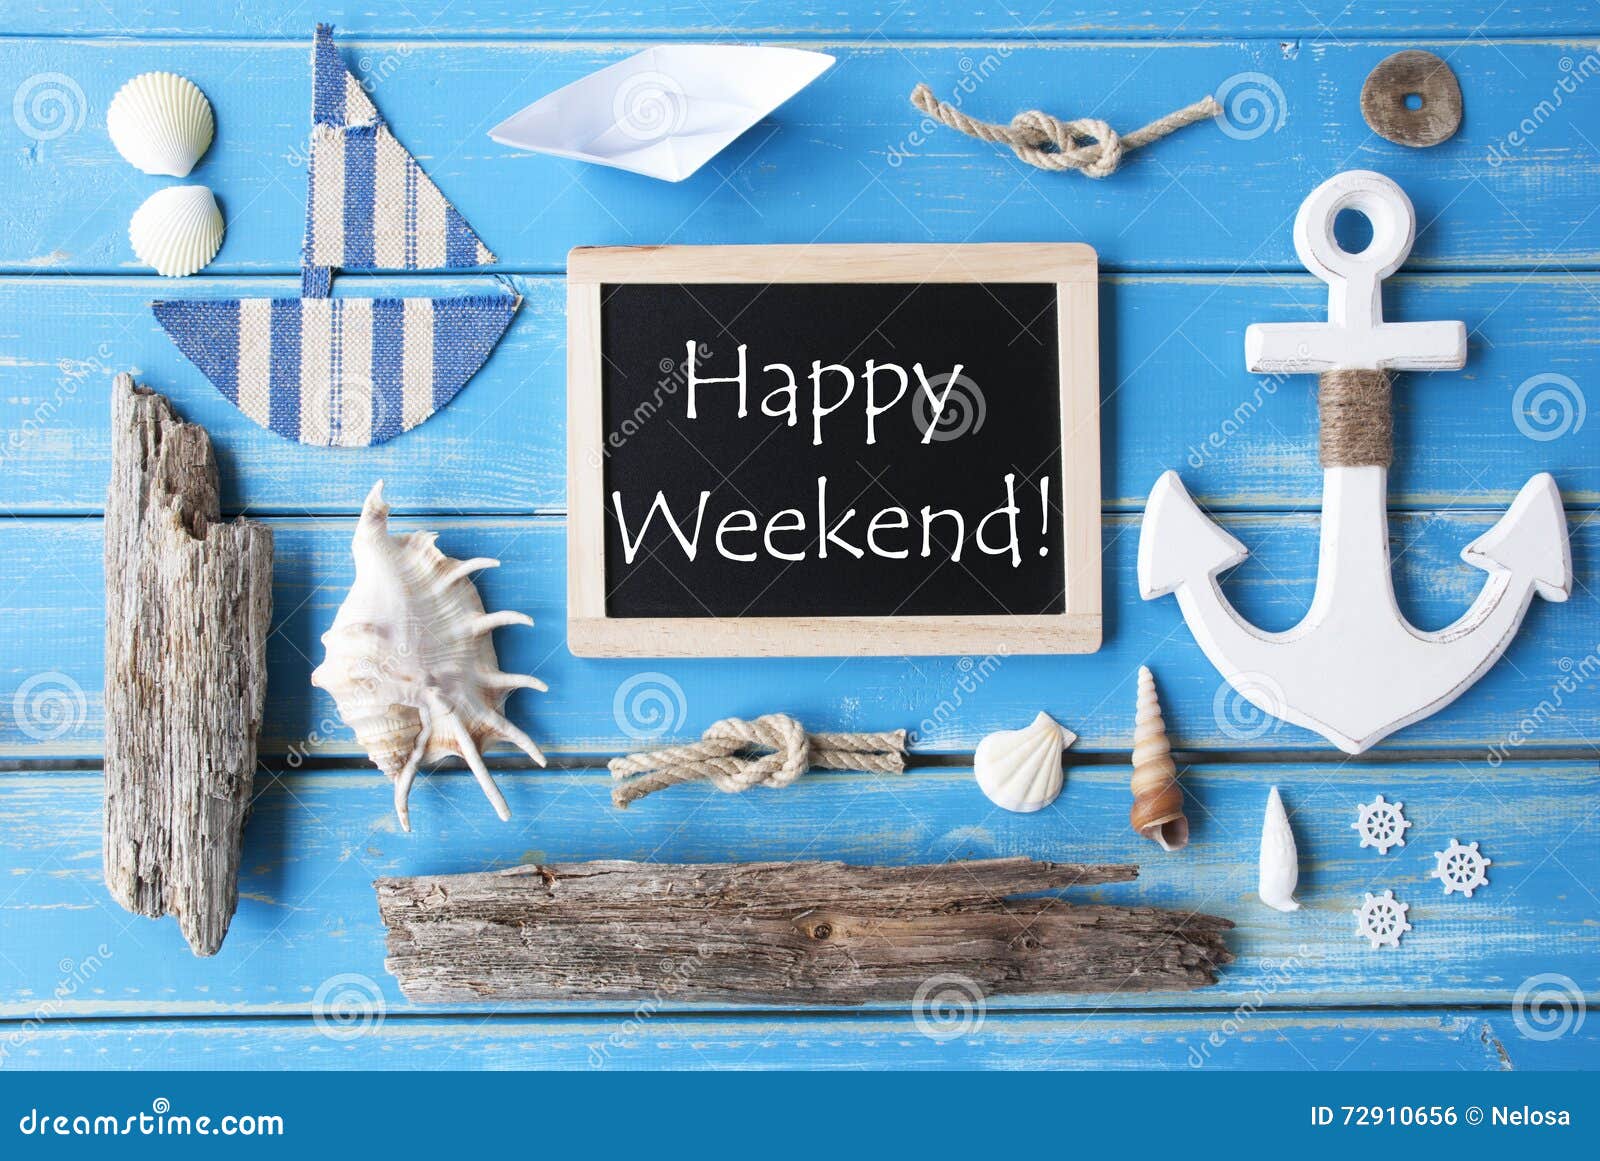 nautic chalkboard and text happy weekend